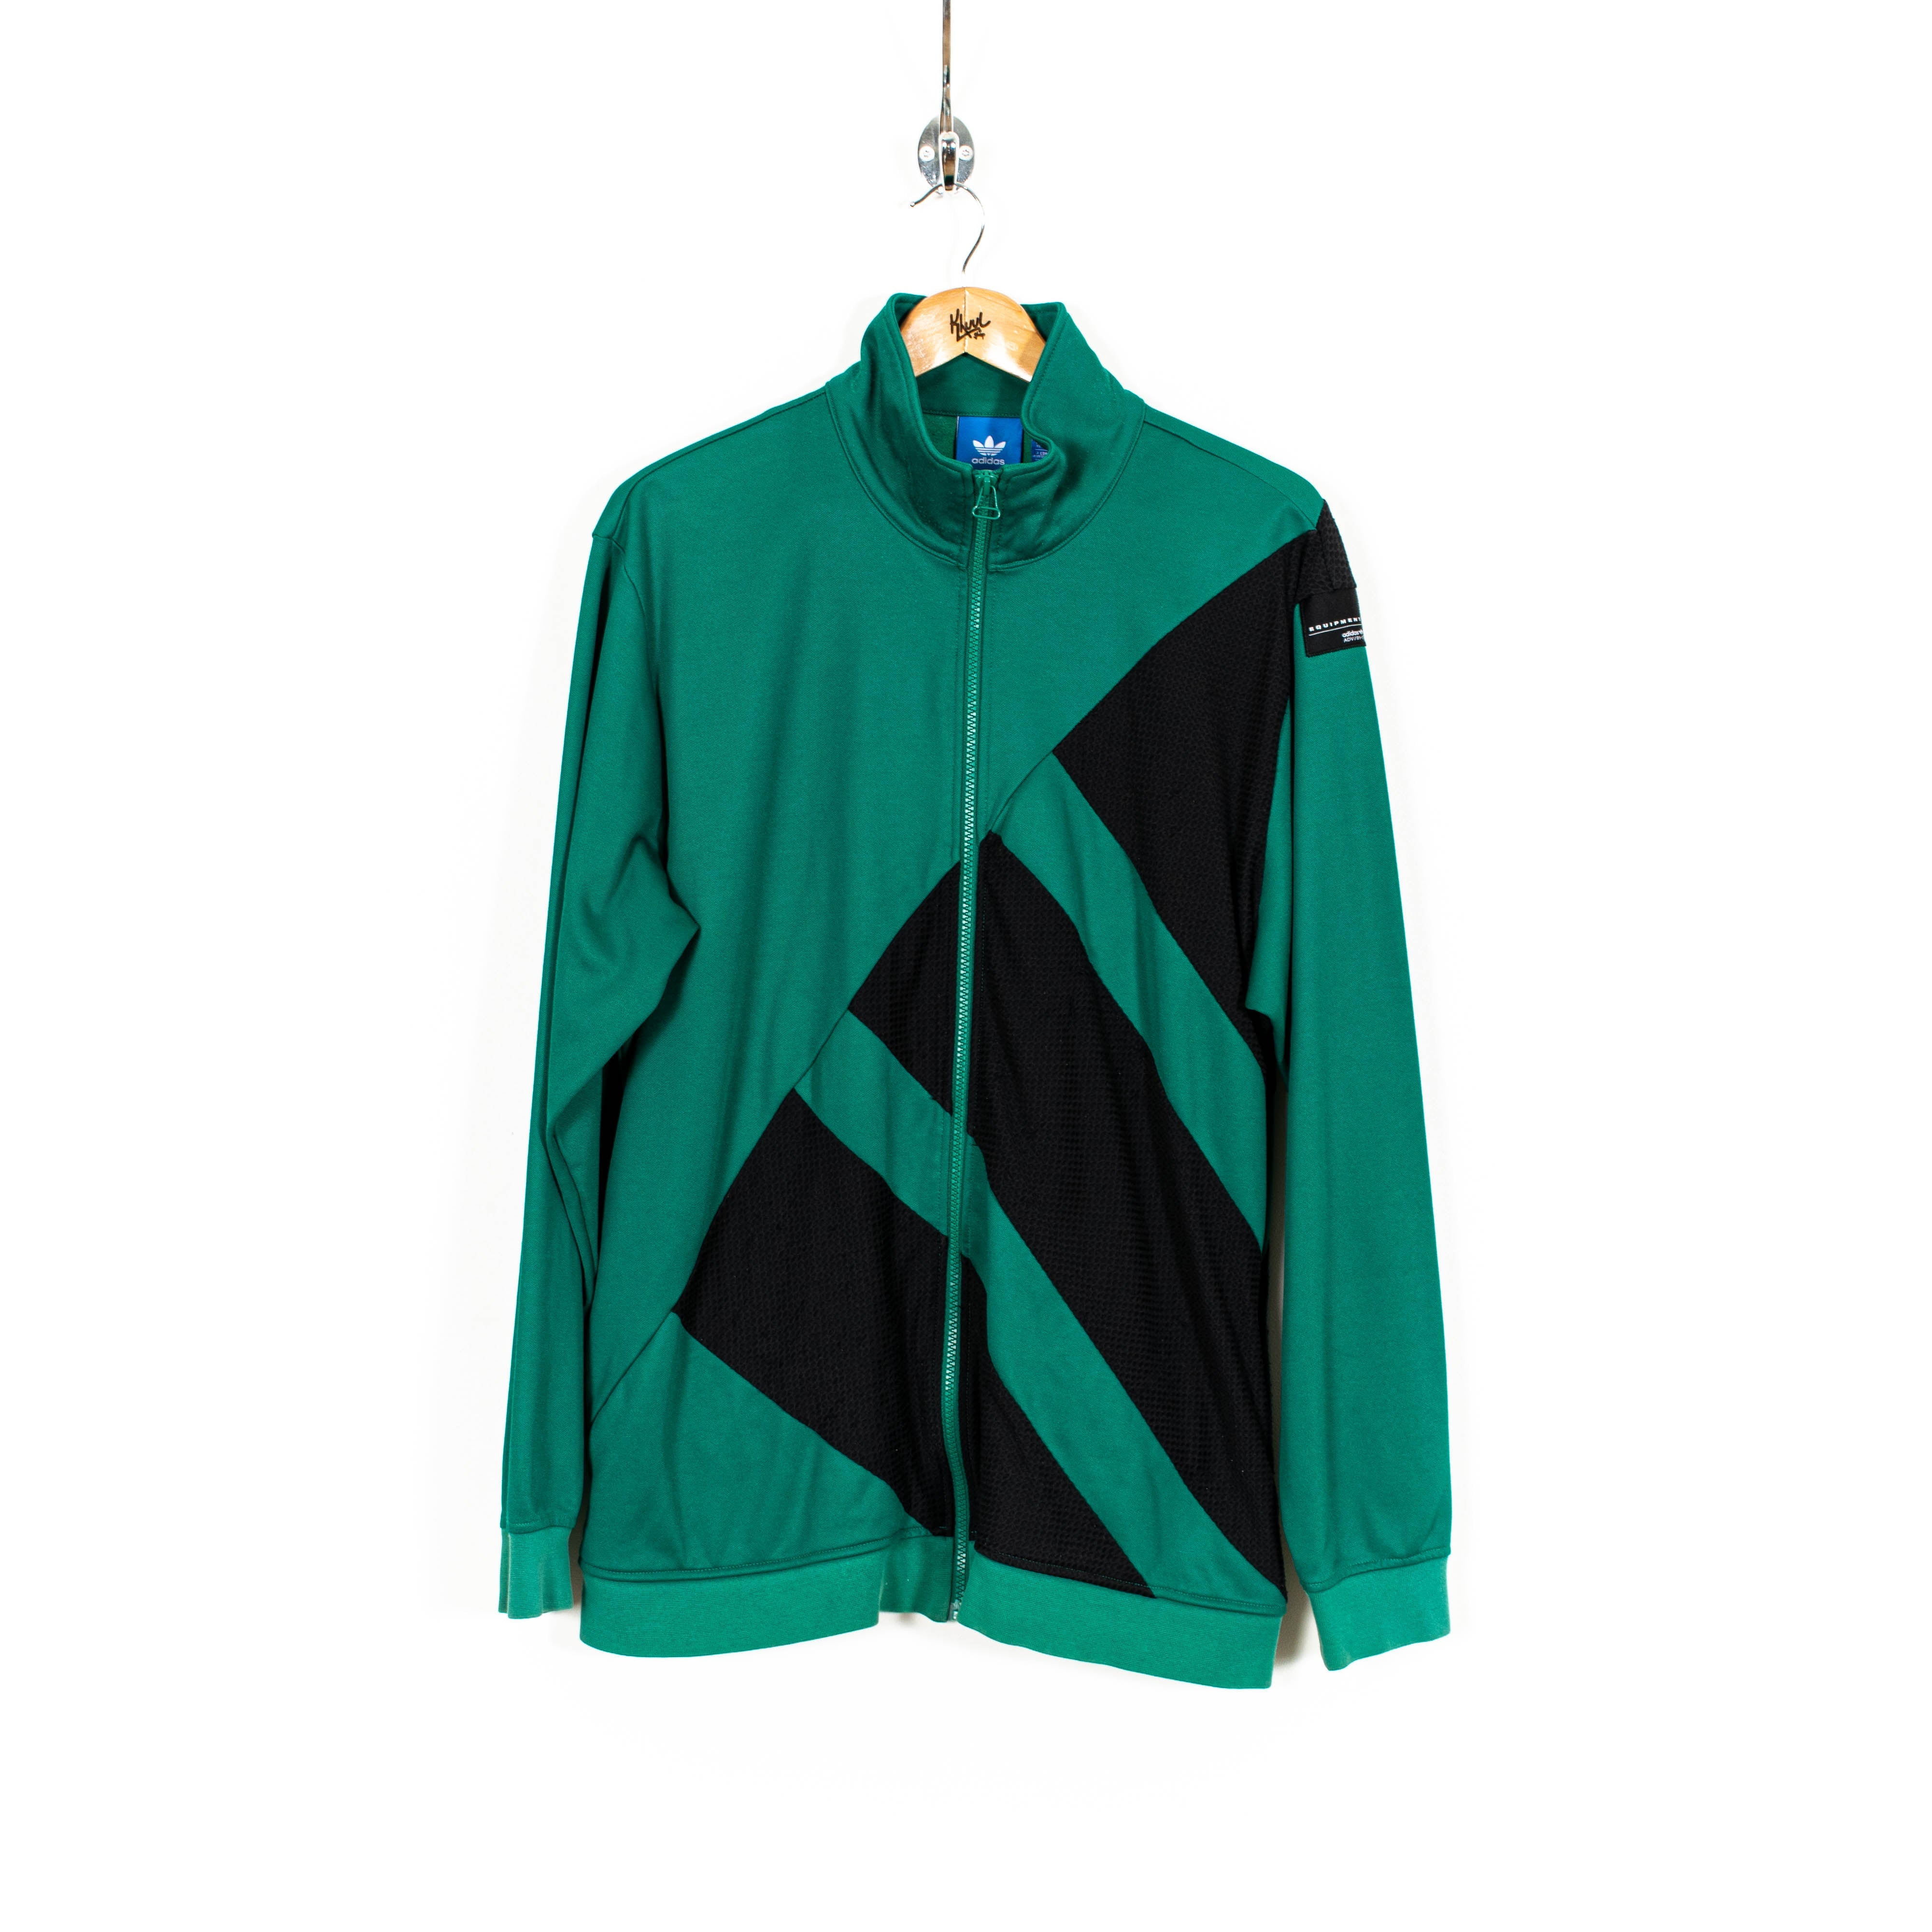 Vintage Adidas Equipment Big Logo Green Black Track Jacket Mens L